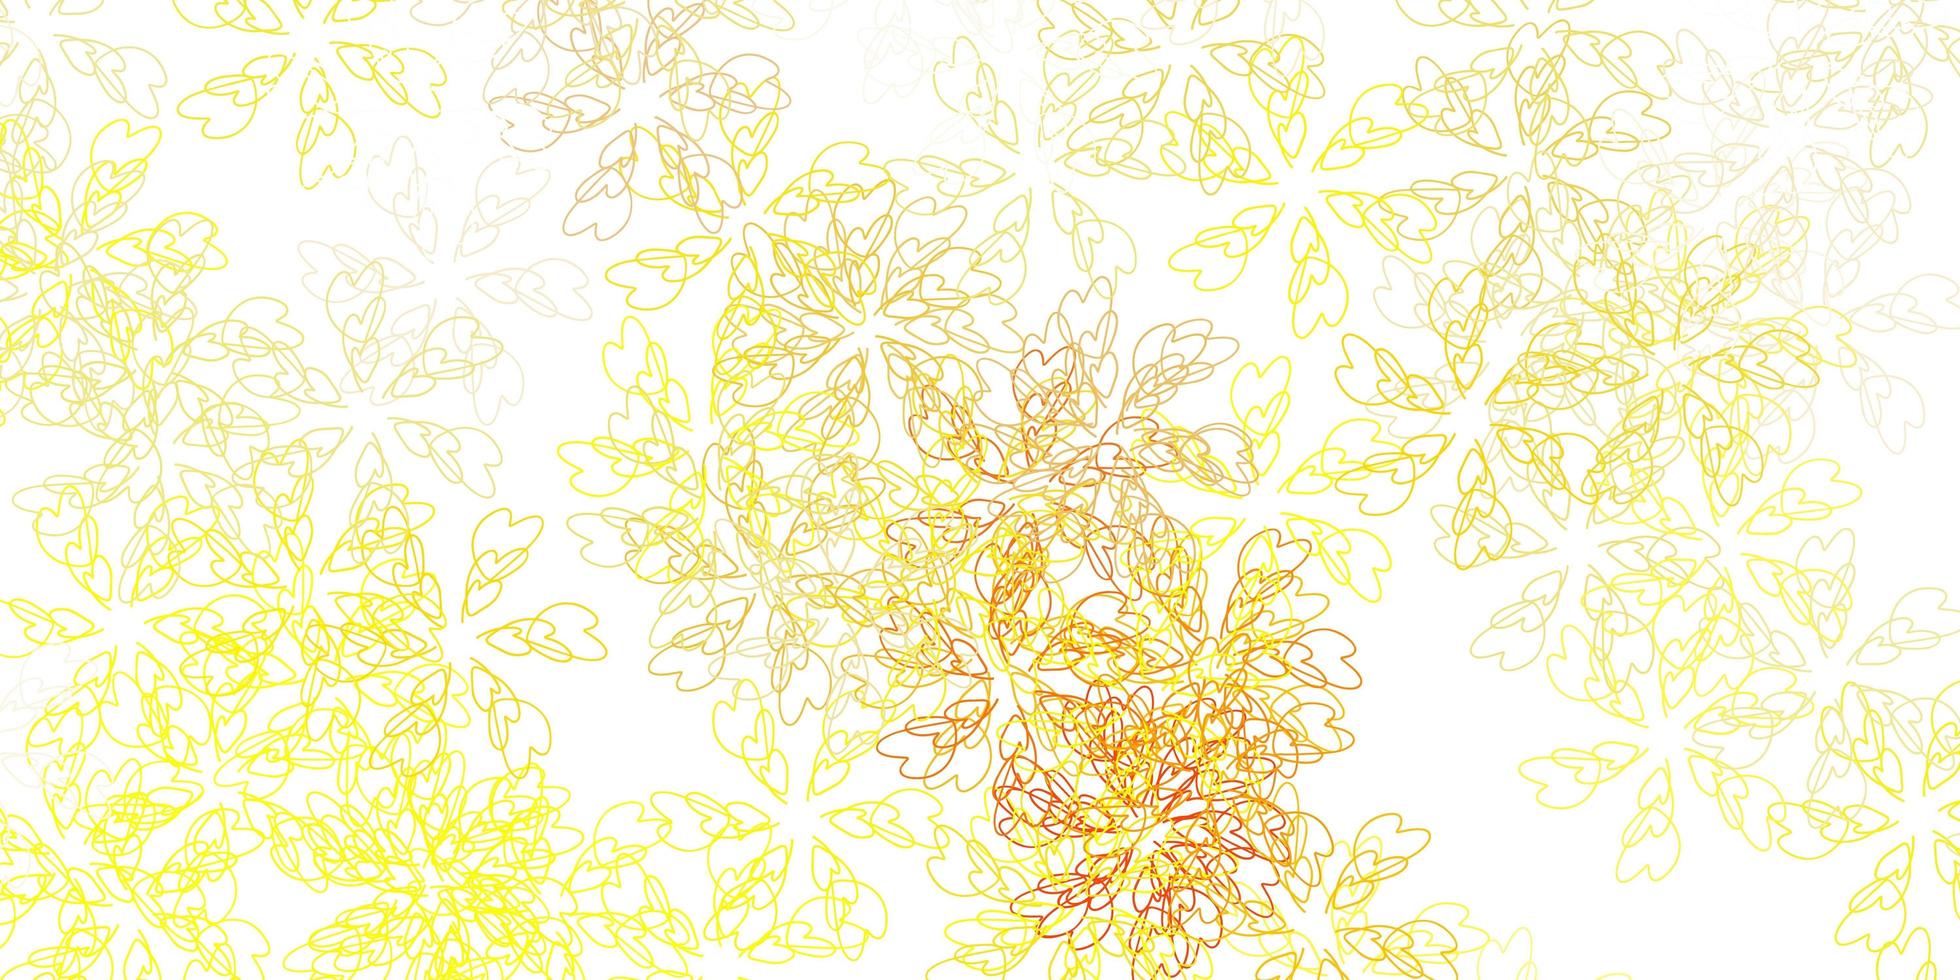 modelo abstrato de vetor laranja claro com folhas.